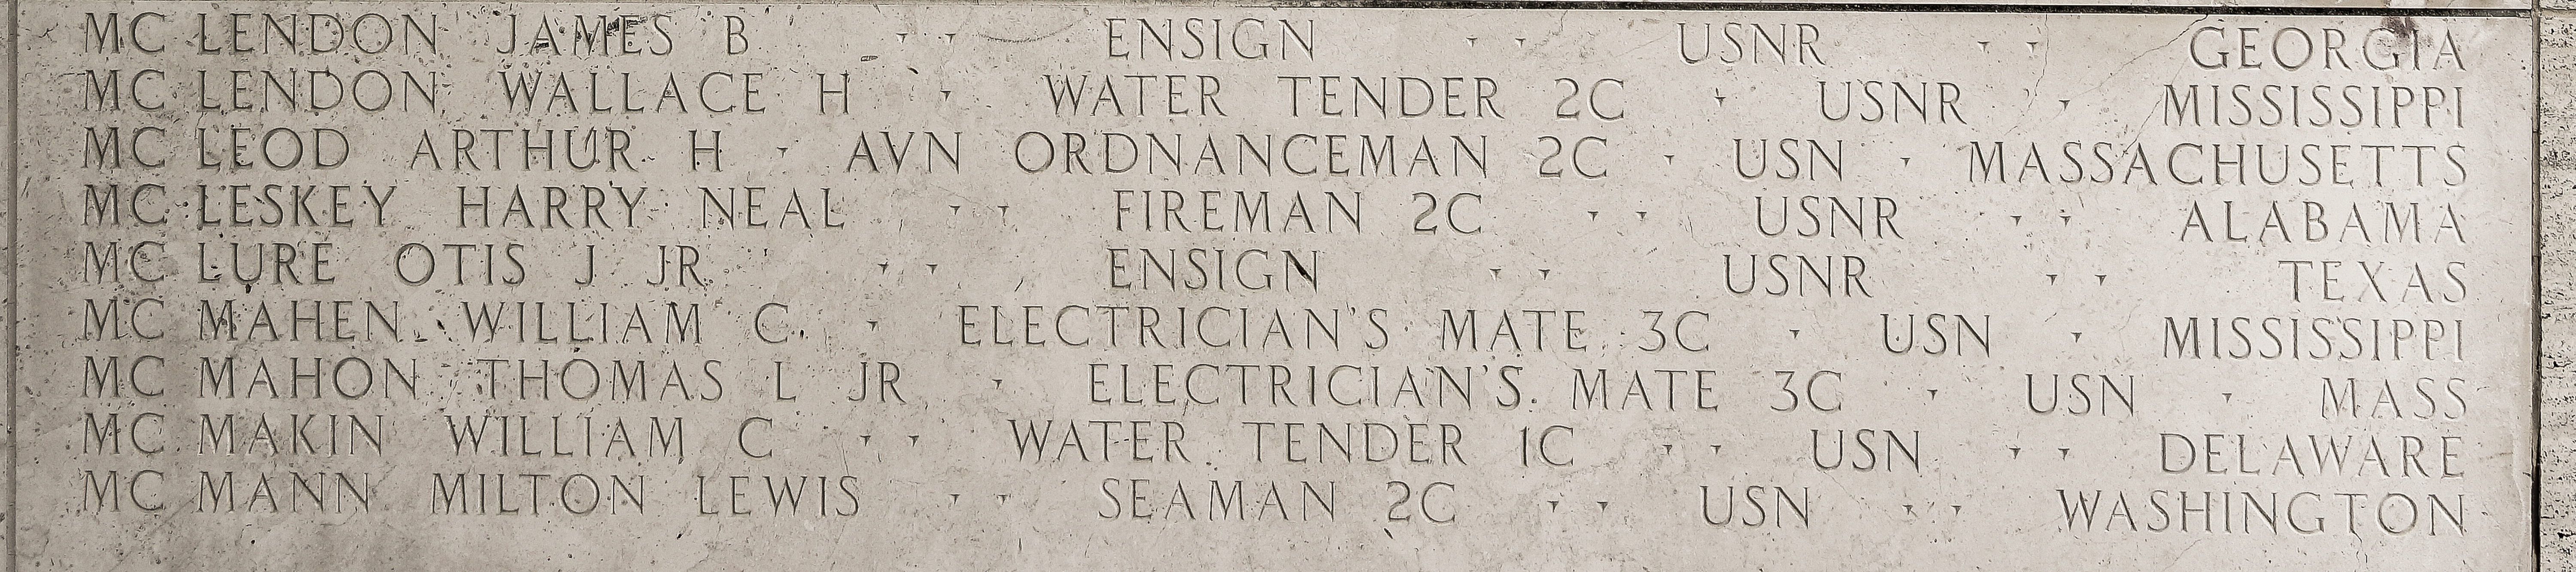 Wallace H. McLendon, Water Tender Second Class